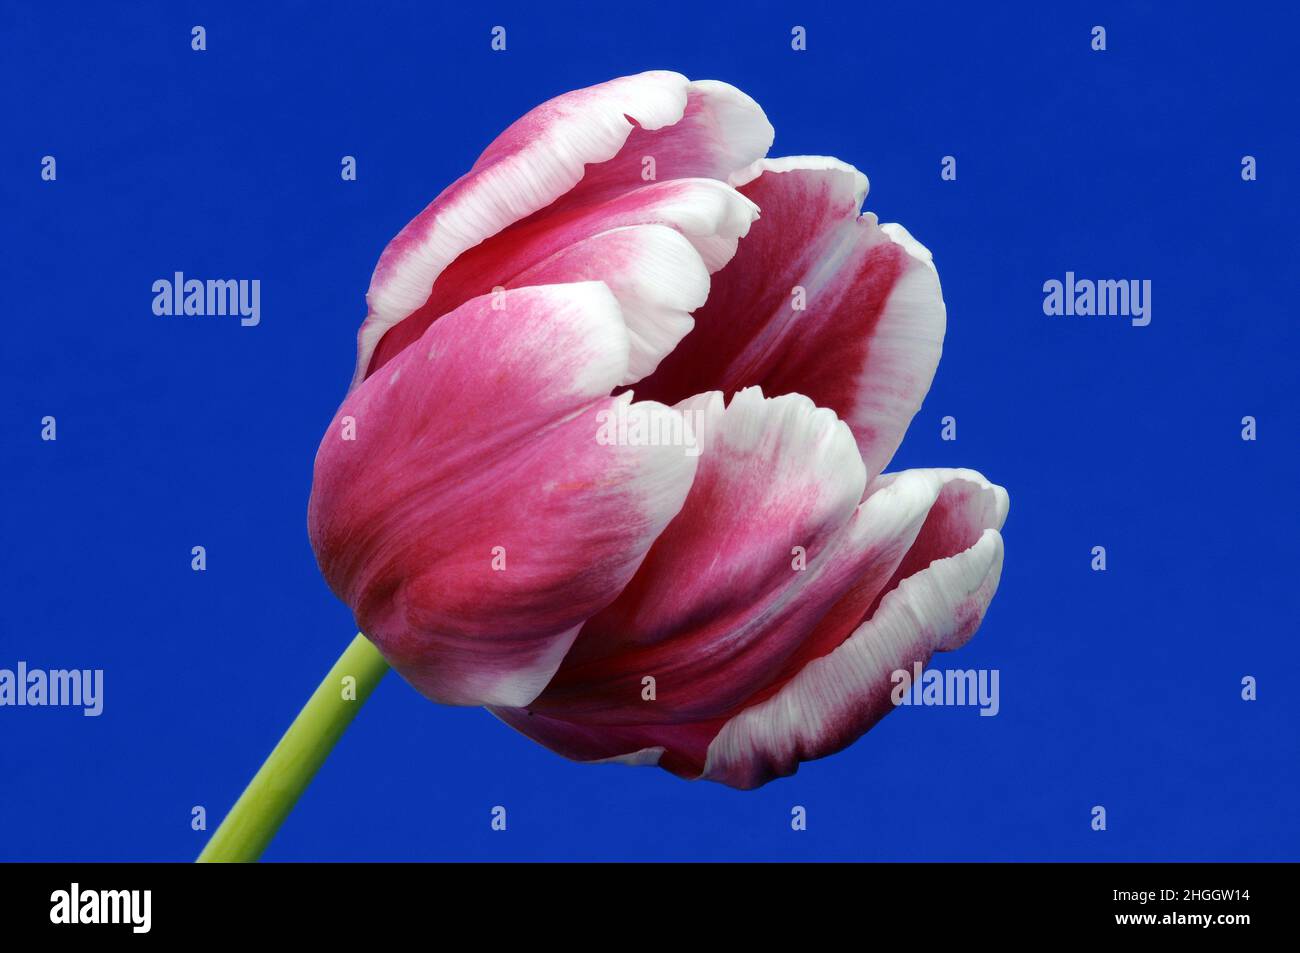 common garden tulip (Tulipa spec.), pink tulip flower in front of blue background Stock Photo